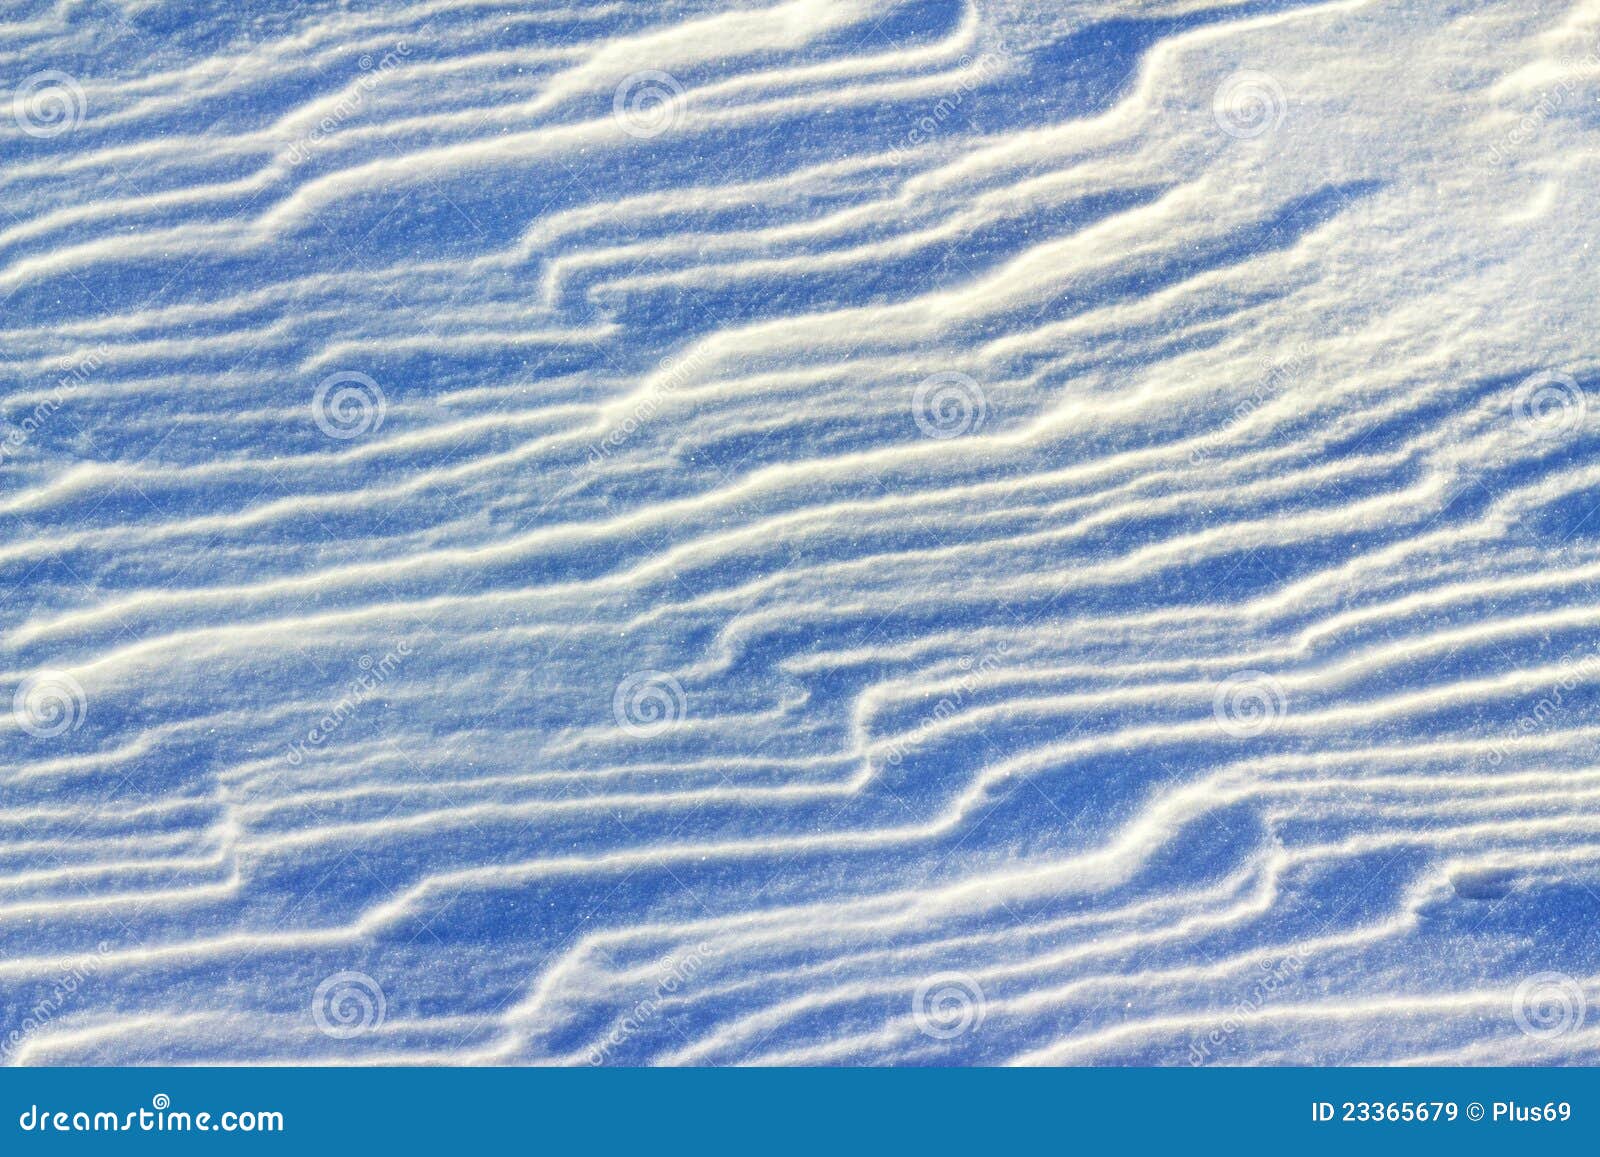 clipart snow drifts - photo #28